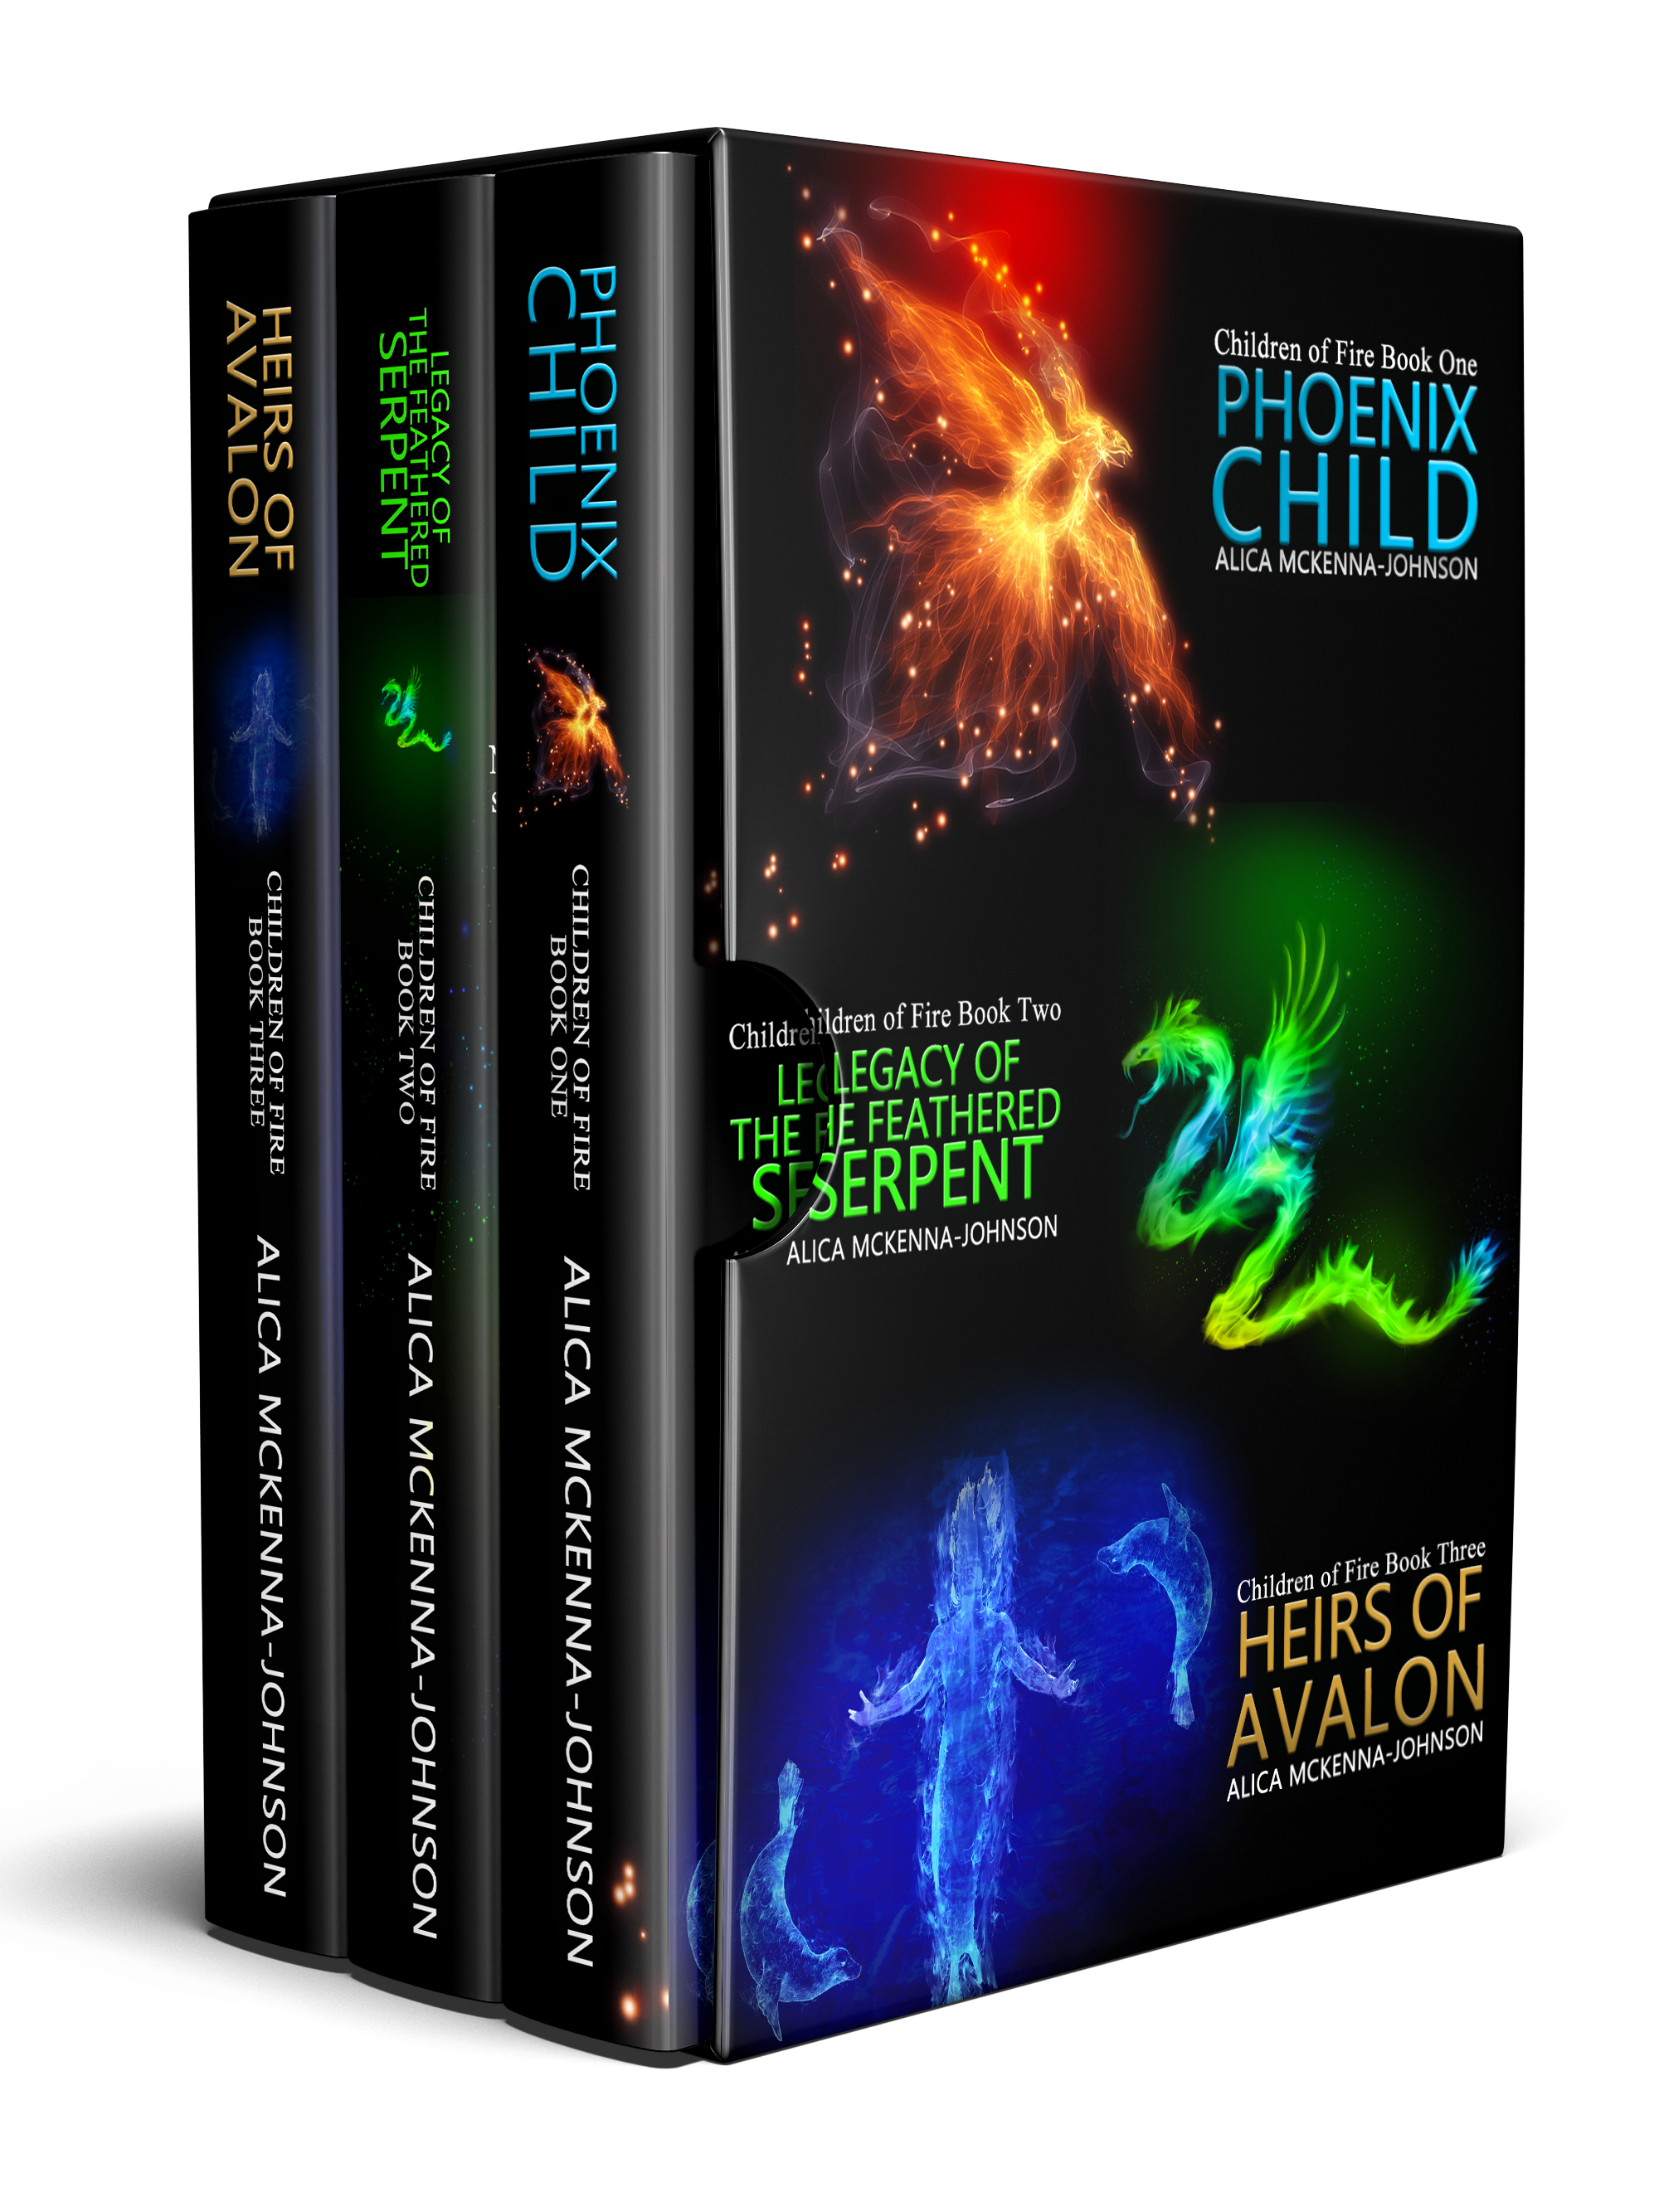 FREE: Children of Fire Series Box Set: Books 1-3 by Alica McKenna-Johnson